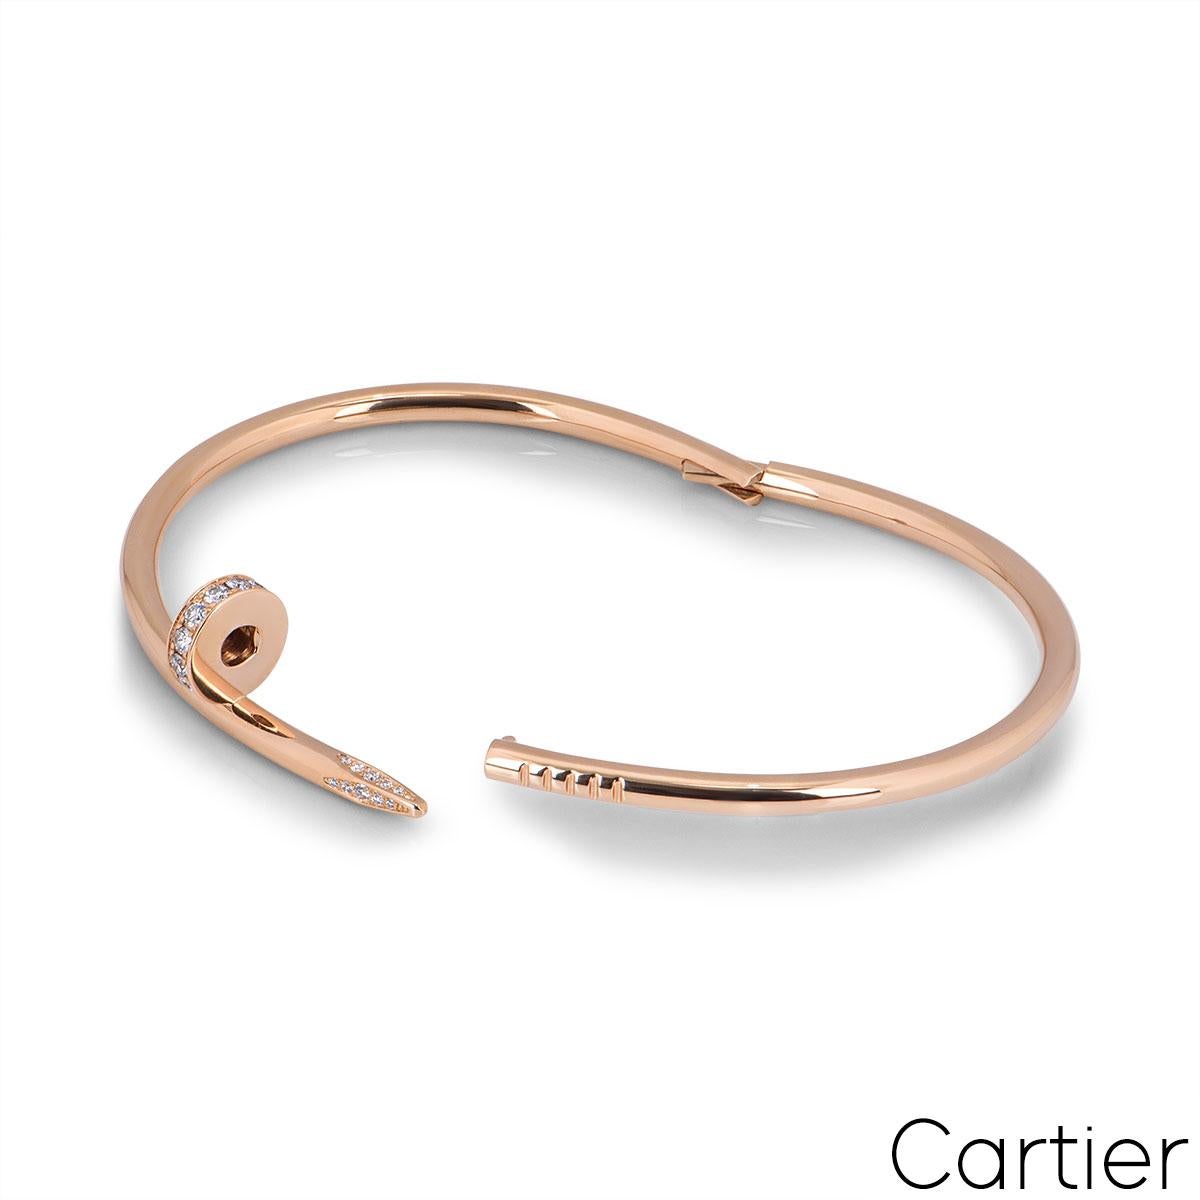 Cartier Rose Gold Diamond Juste Un Clou Bracelet Size 20 B6048520 In Excellent Condition For Sale In London, GB